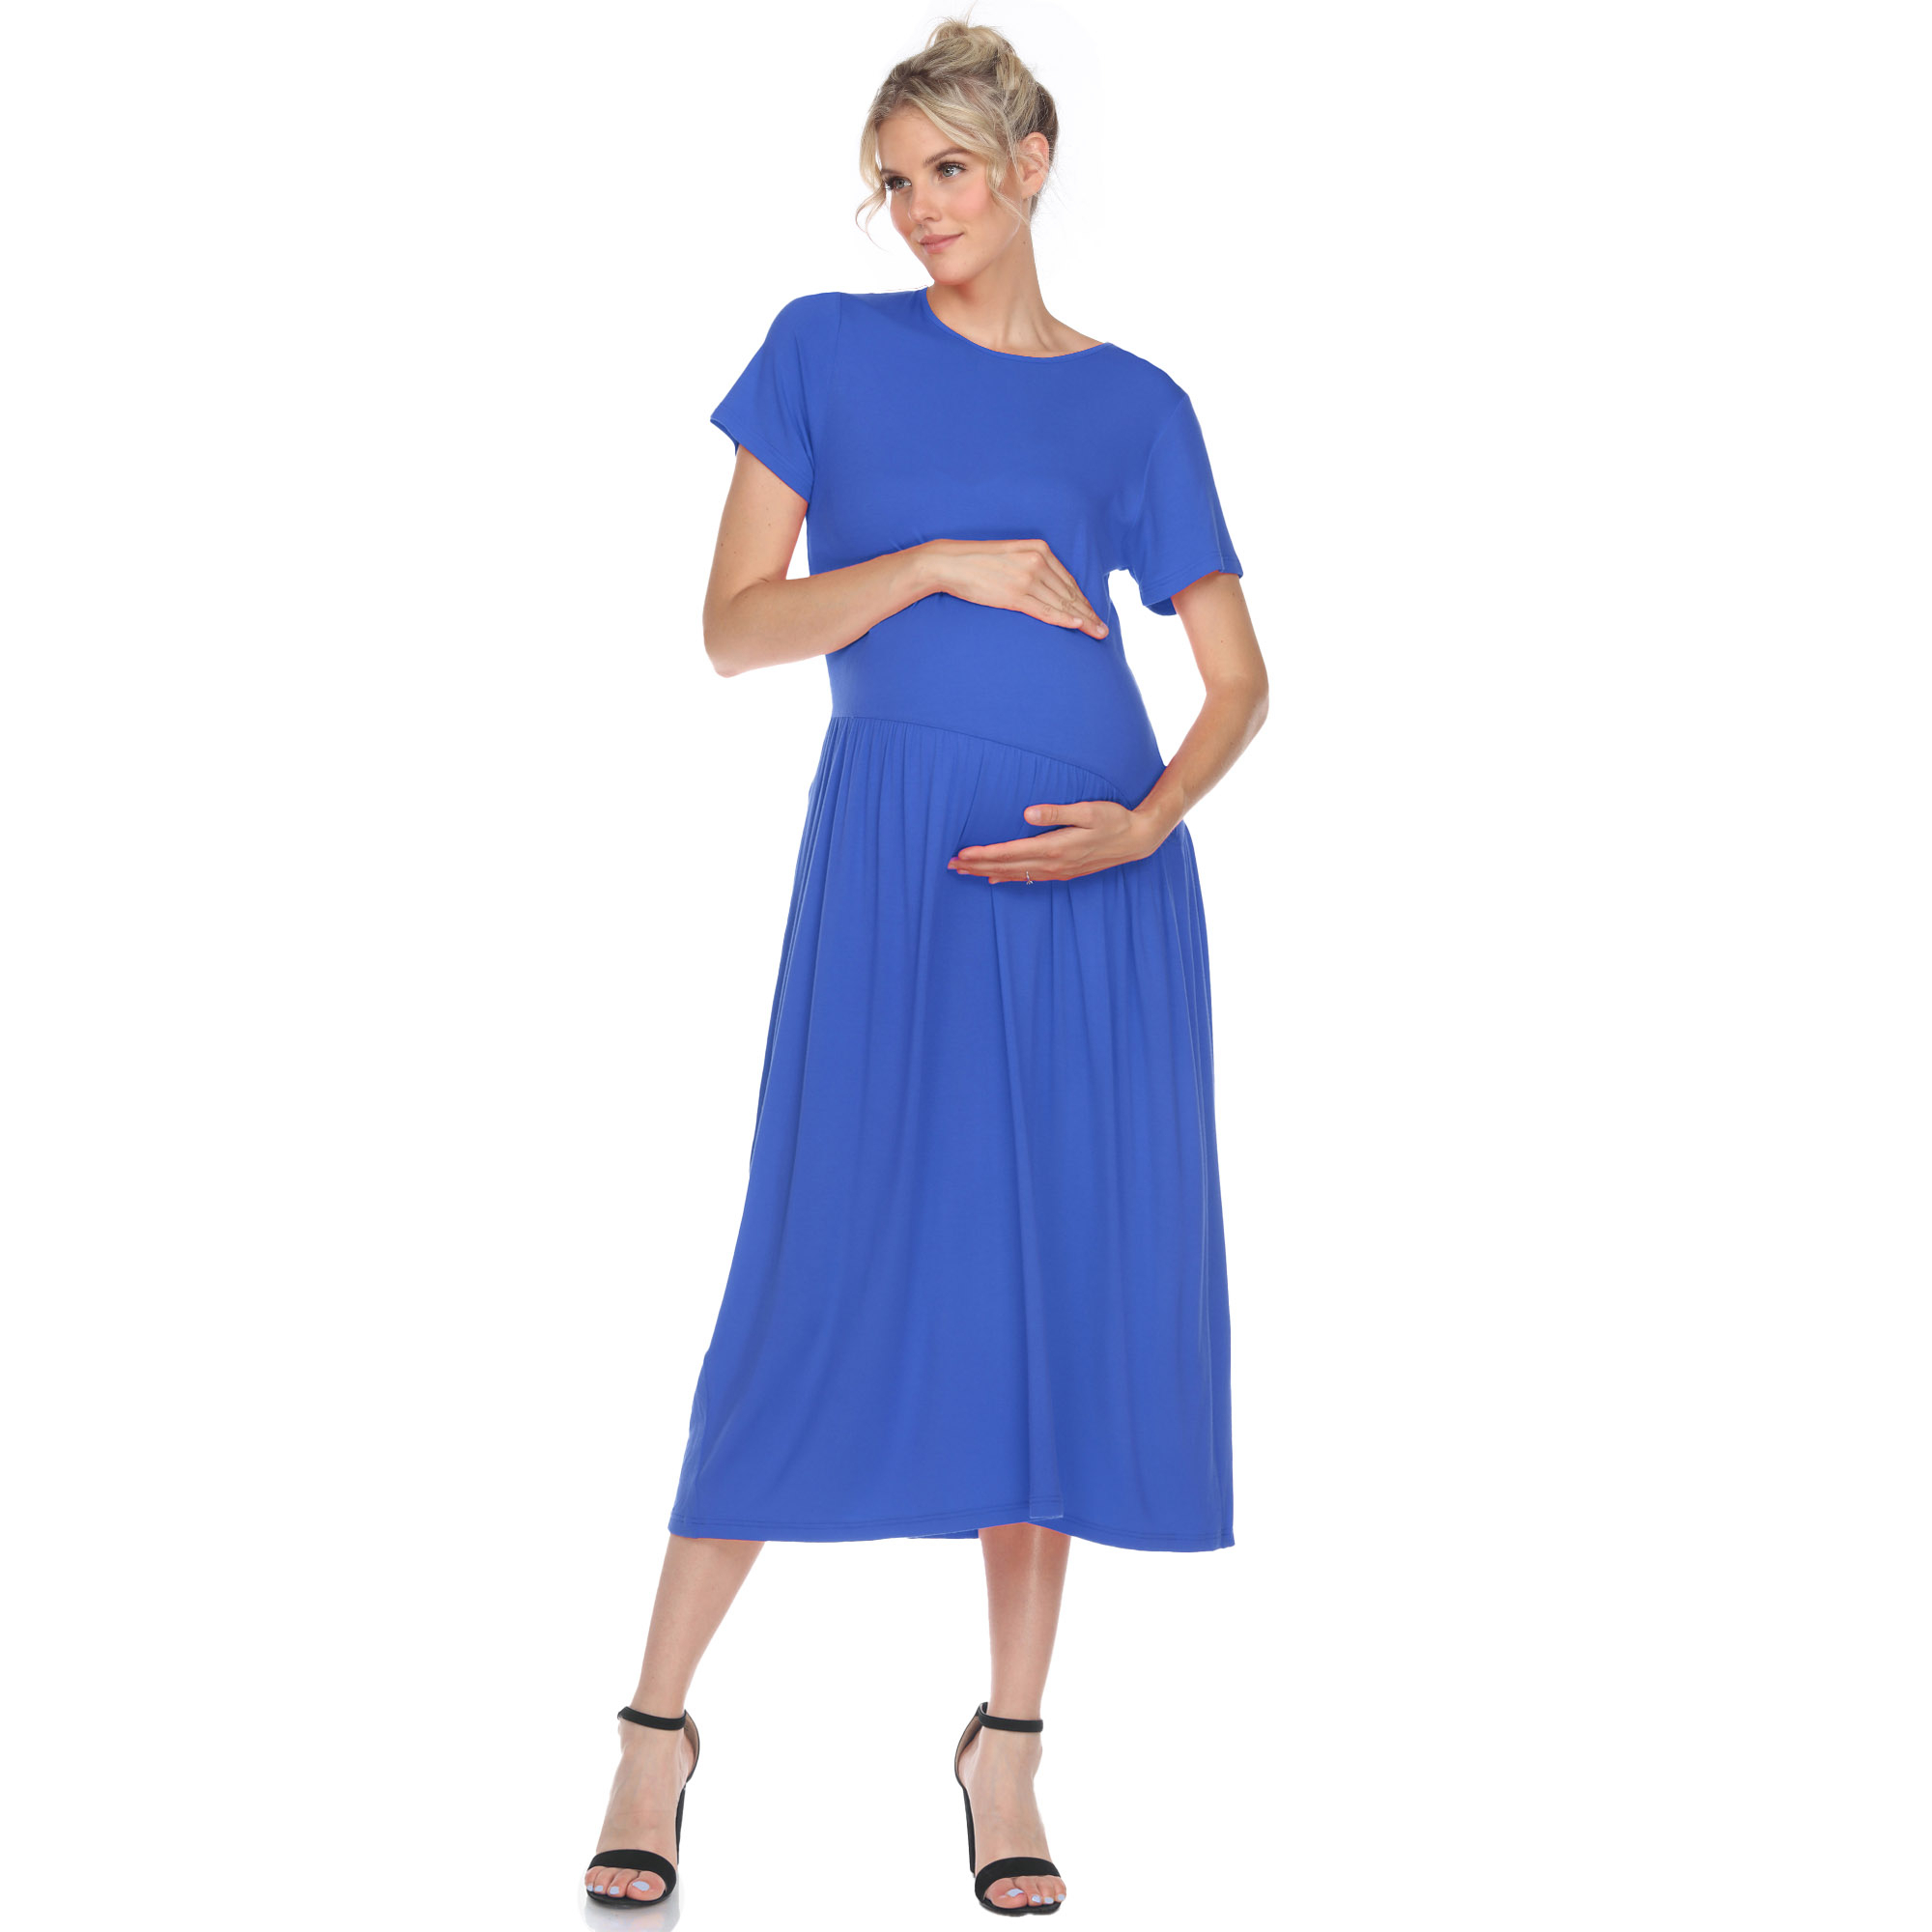 White Mark Womenâs Maternity Short Sleeve Maxi Dress - Royal, 1X